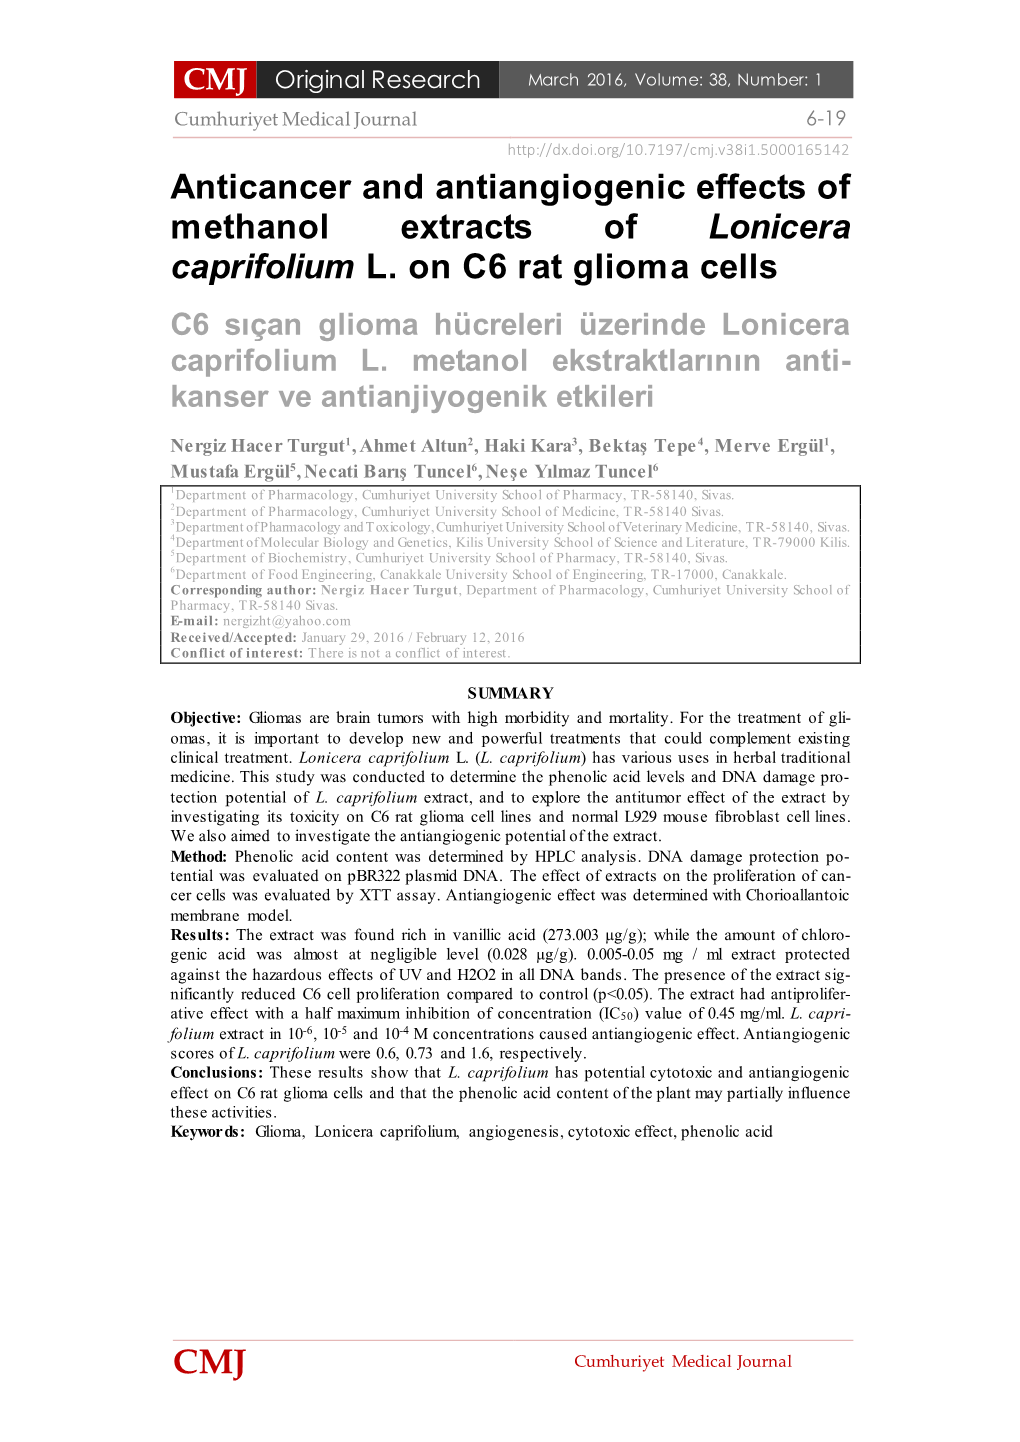 CMJ Anticancer and Antiangiogenic Effects of Methanol Extracts of Lonicera Caprifolium L. on C6 Rat Glioma Cells